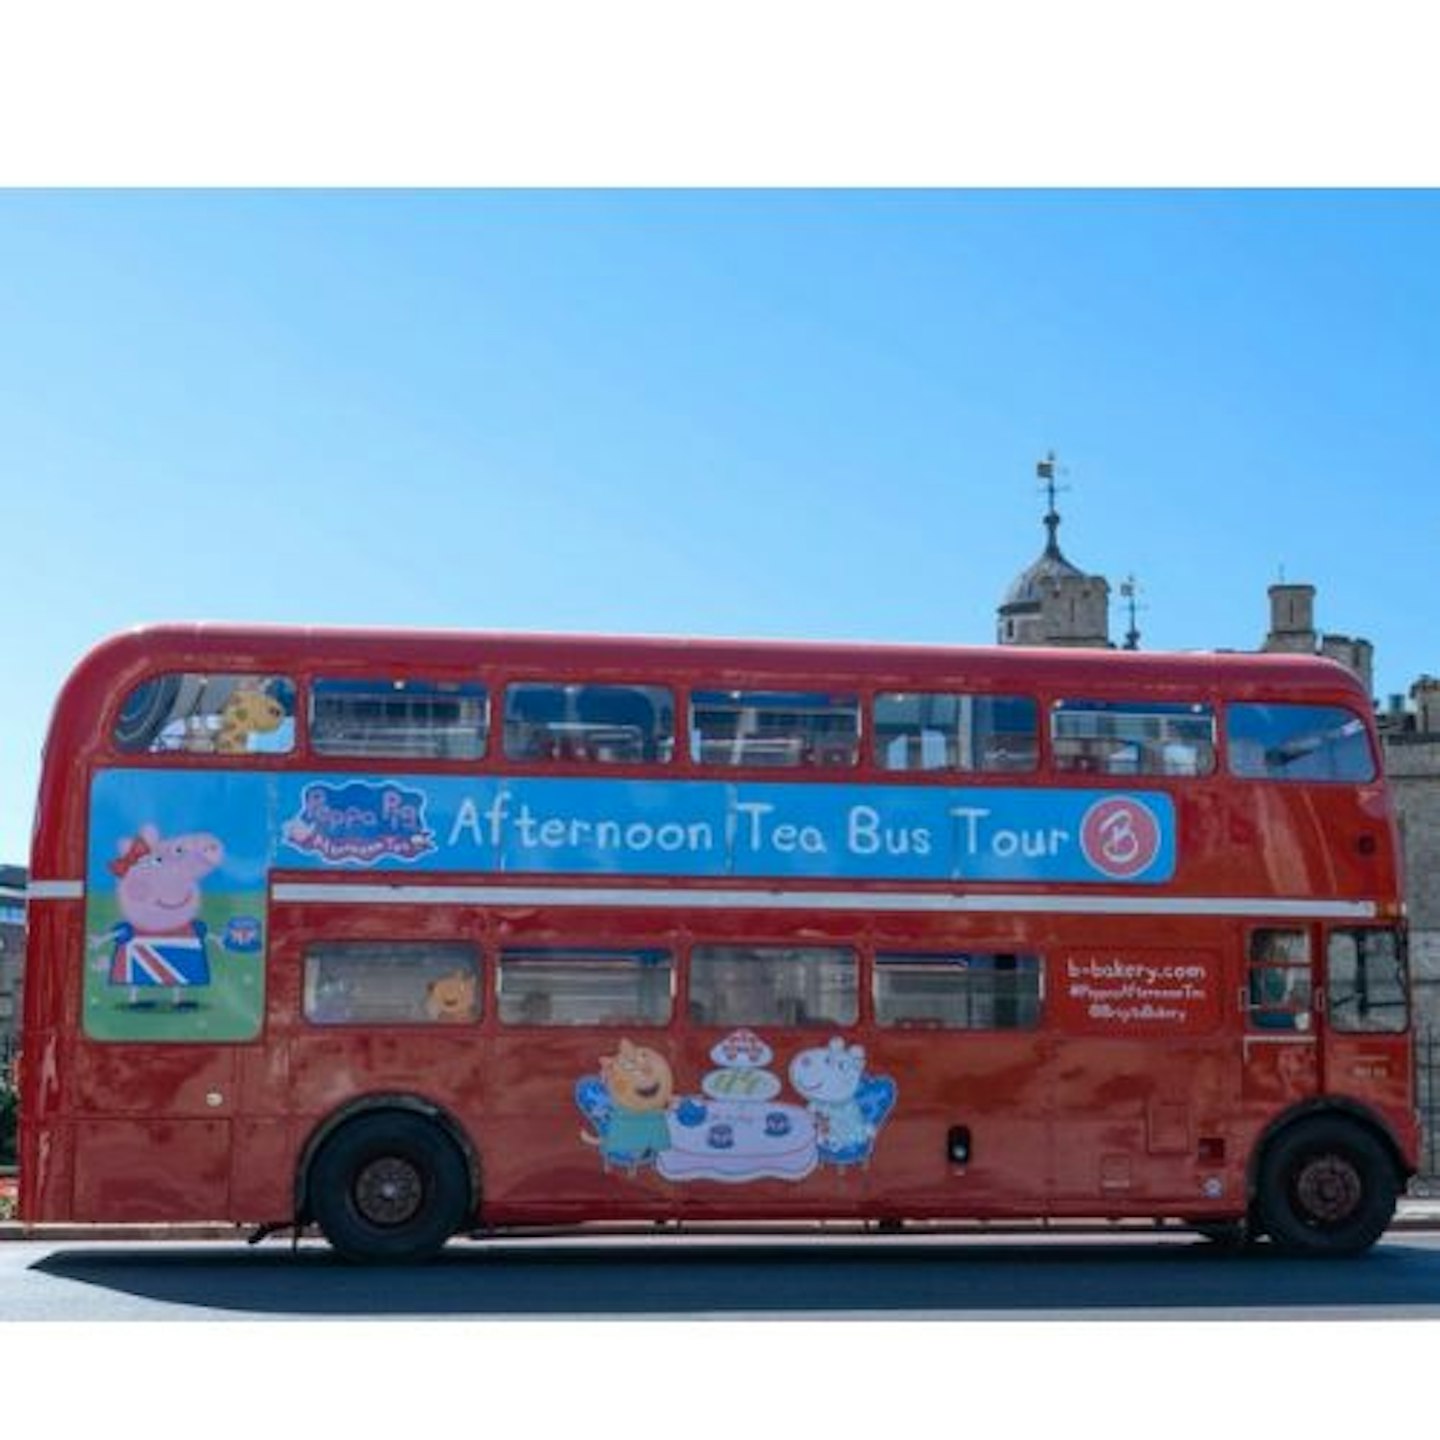 Peppa Pig London bus tour